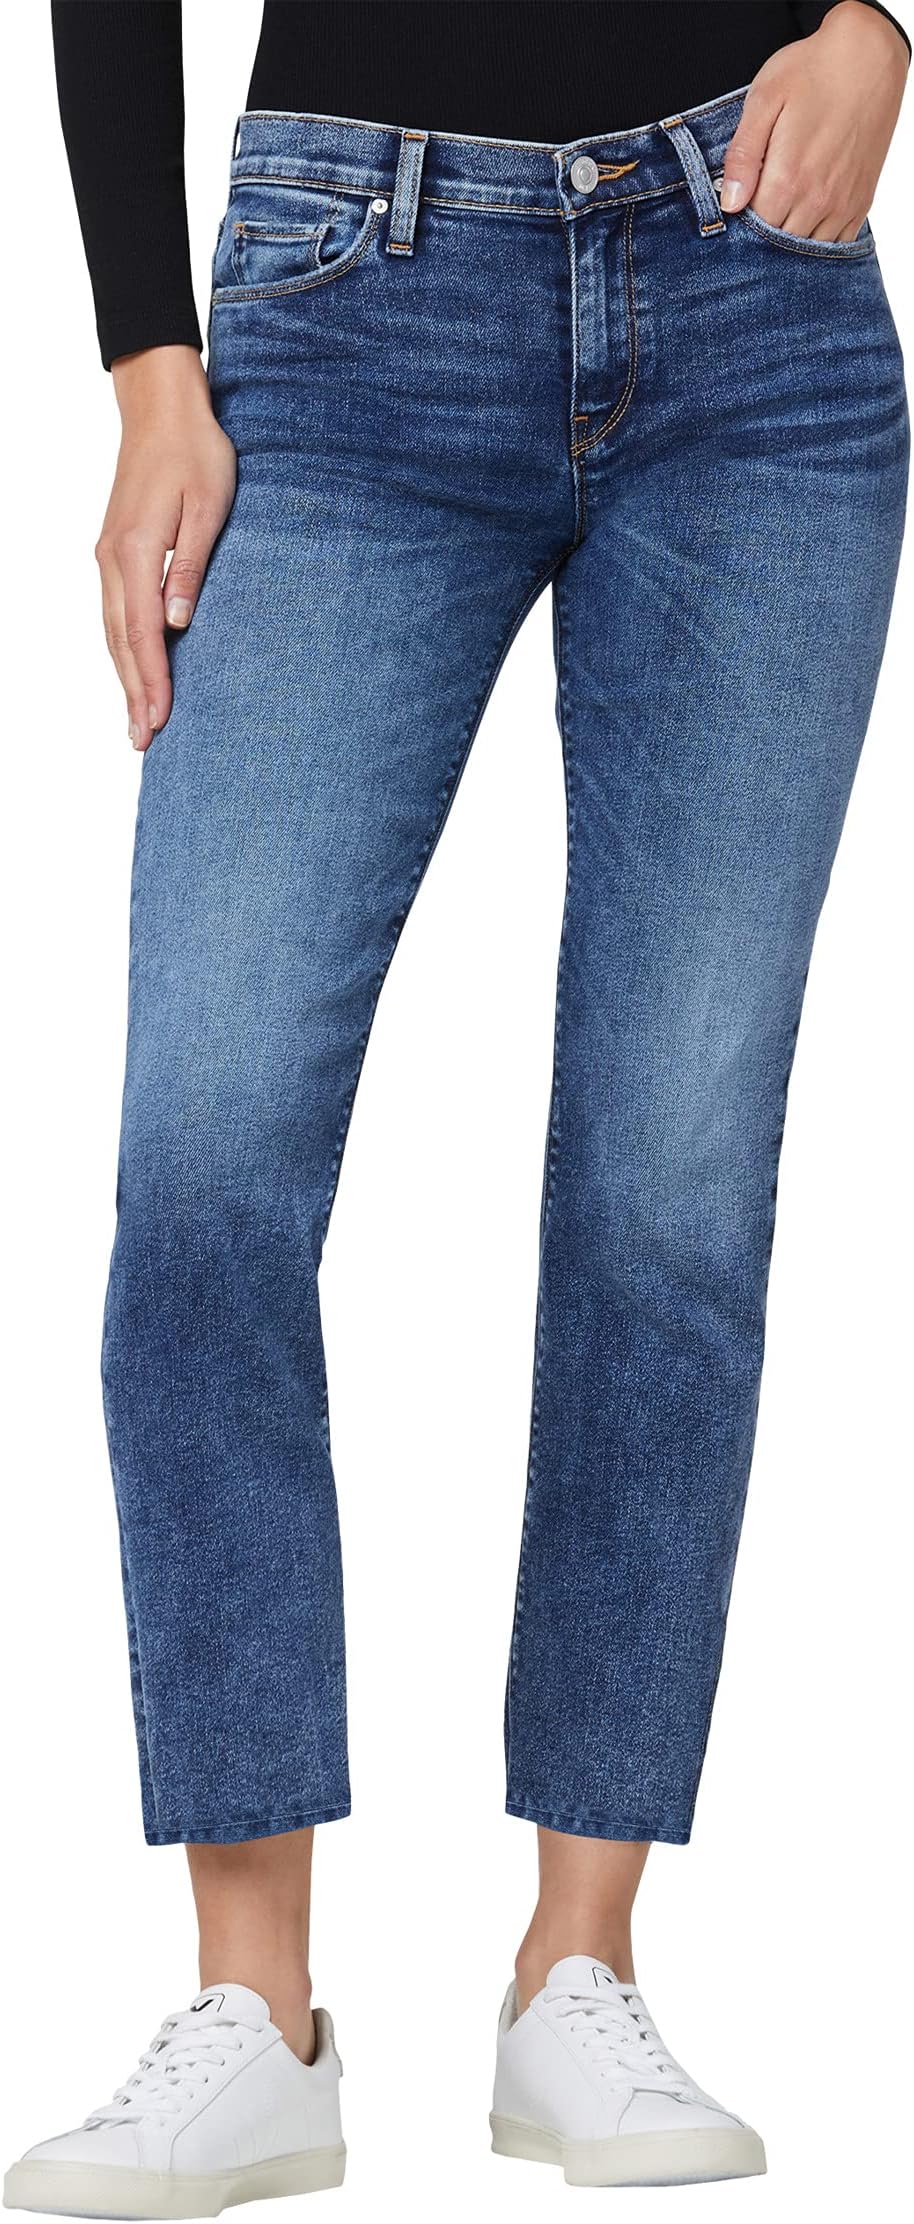 джинсы hudson jeans lana slim boyfriend crop in journey home destructed Джинсы Nico Mid-Rise Straight Ankle in Journey Home Hudson Jeans, цвет Journey Home